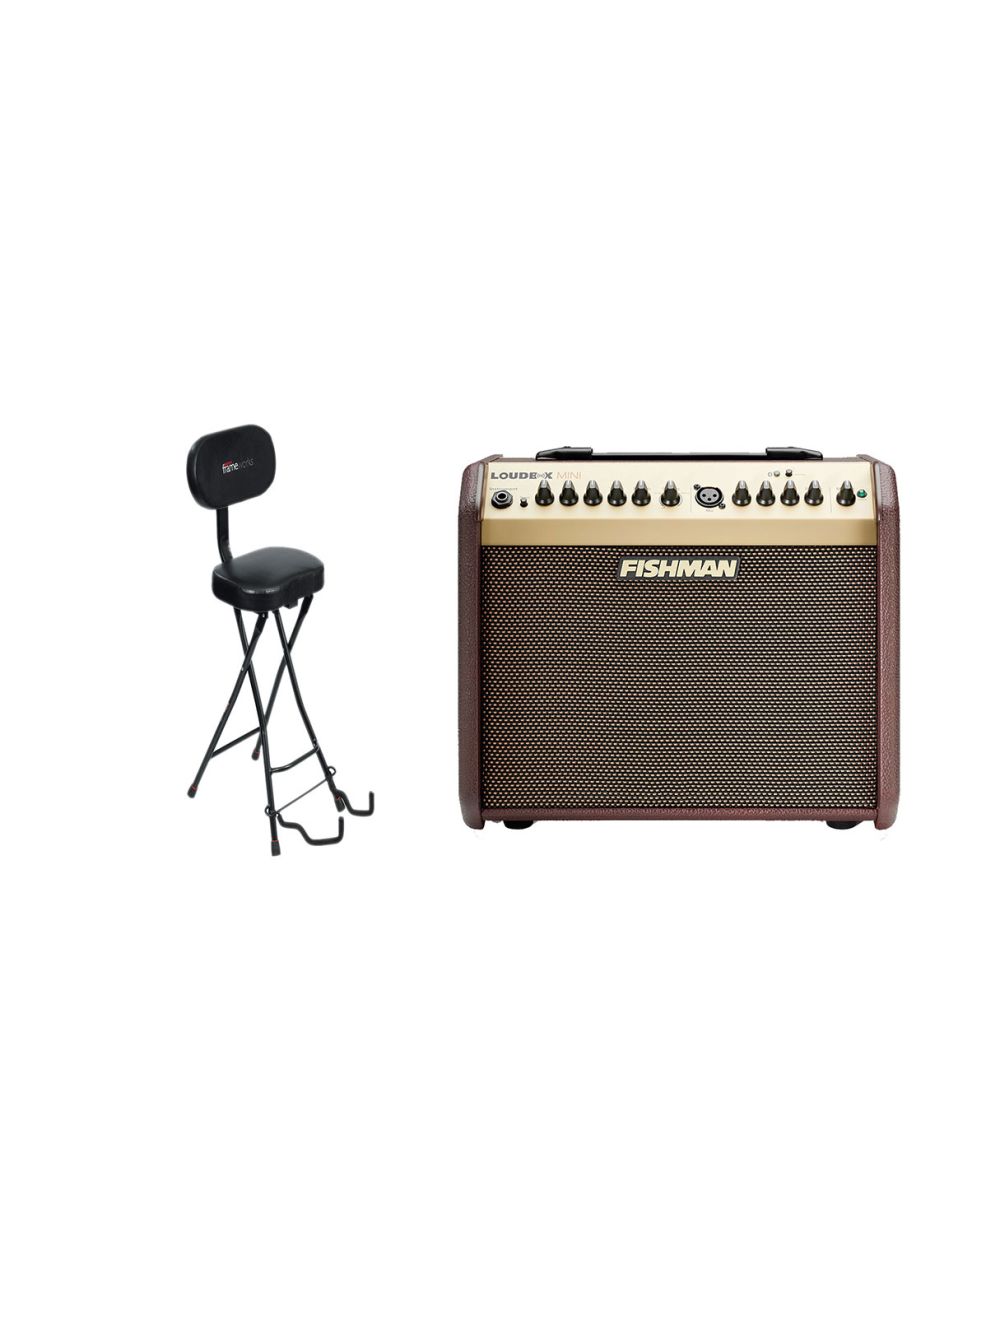 Fishman Loudbox Mini with Bluetooth + Gator Guitar Seat/Stand Combo